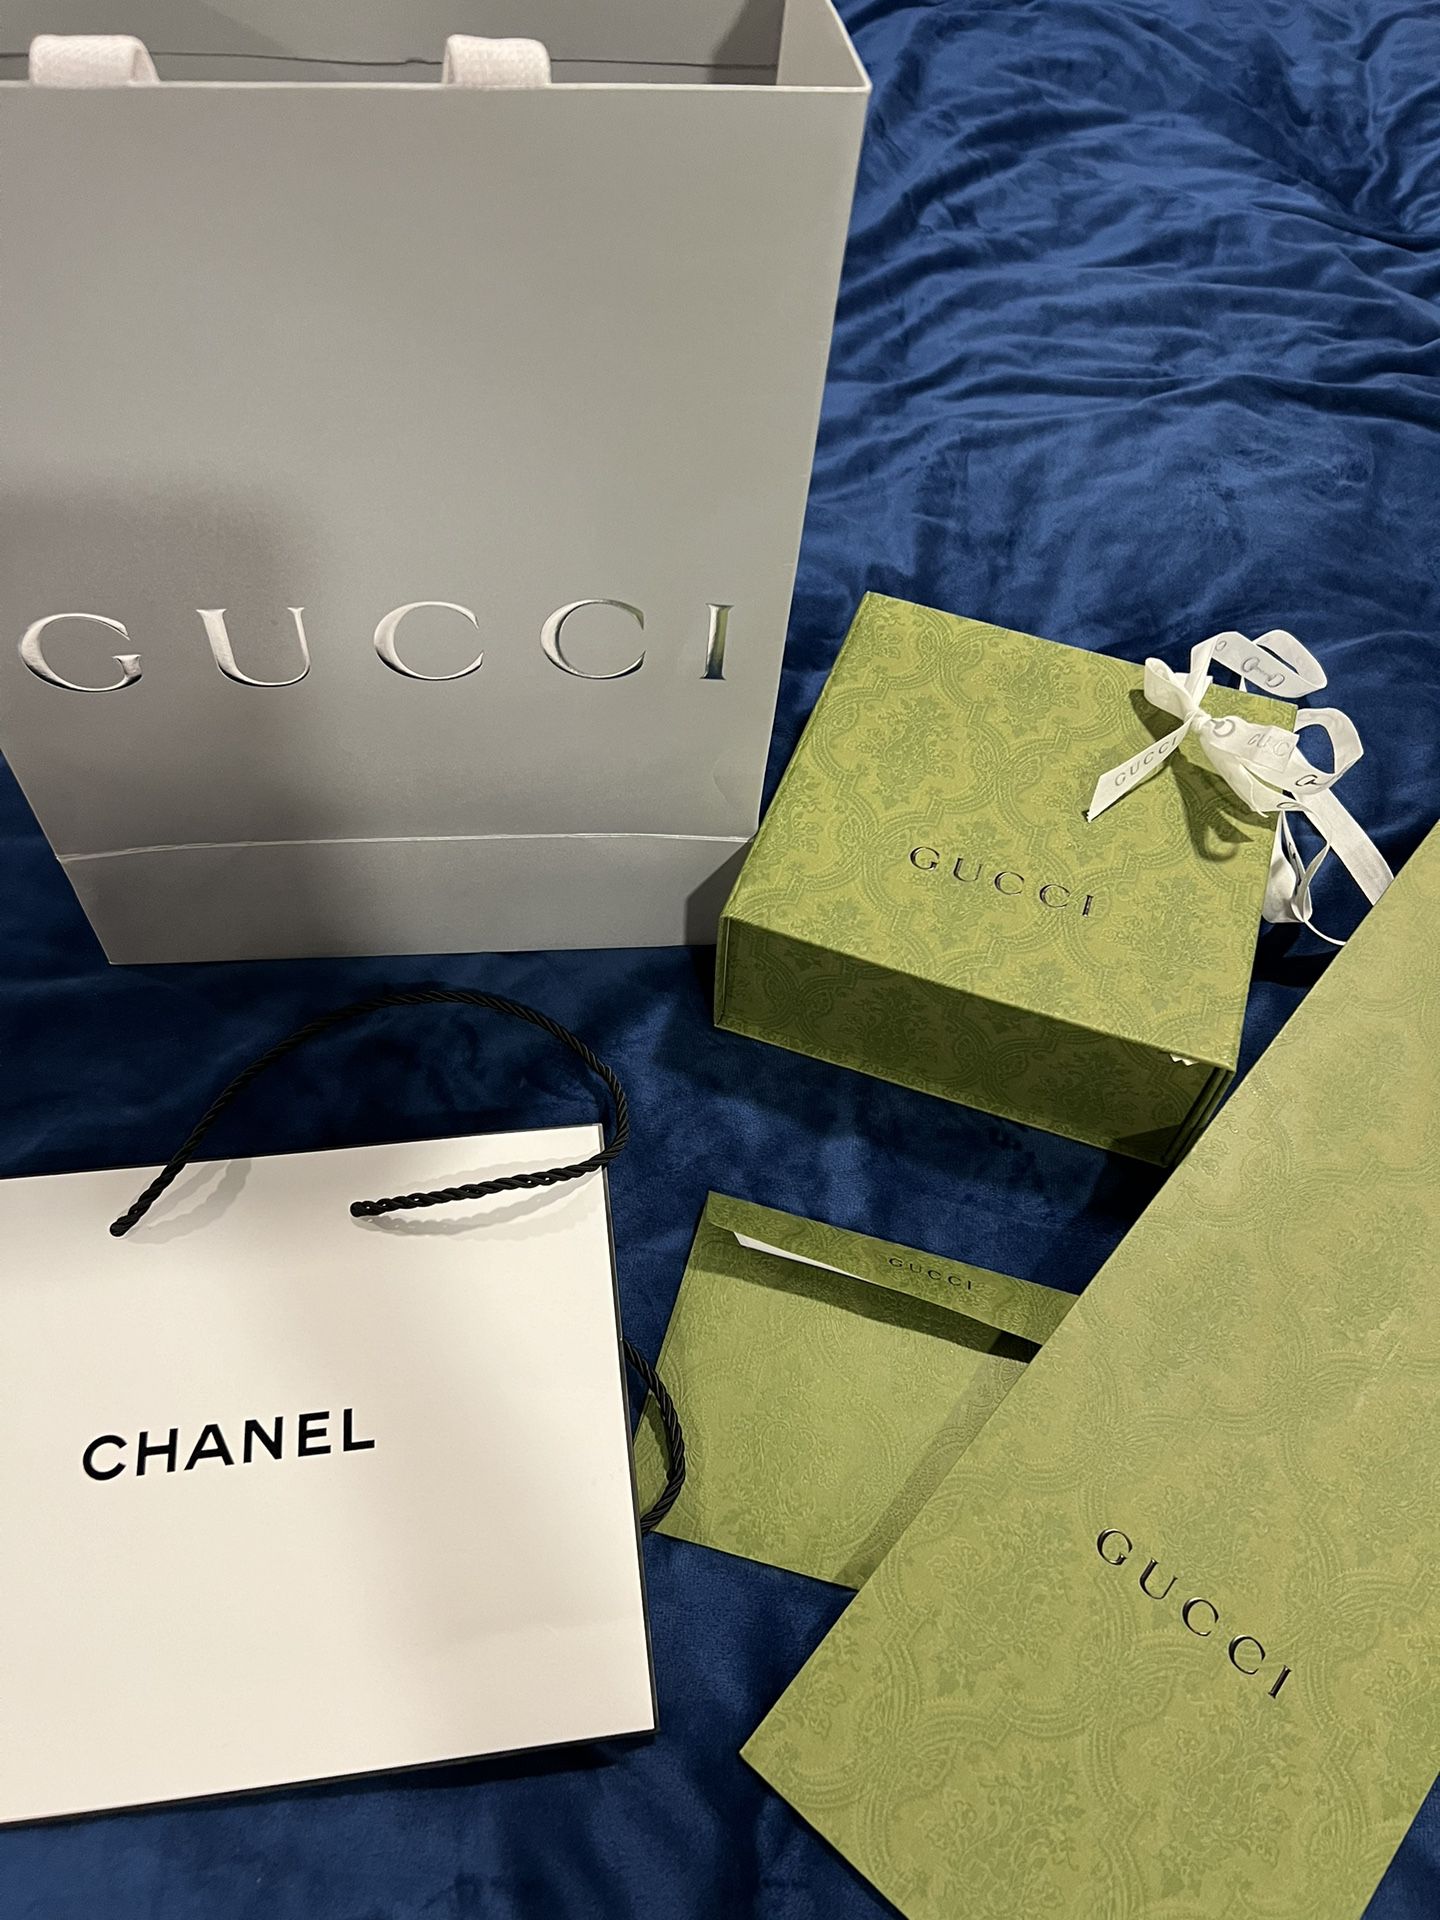 Original Gucci Chanel Packaging